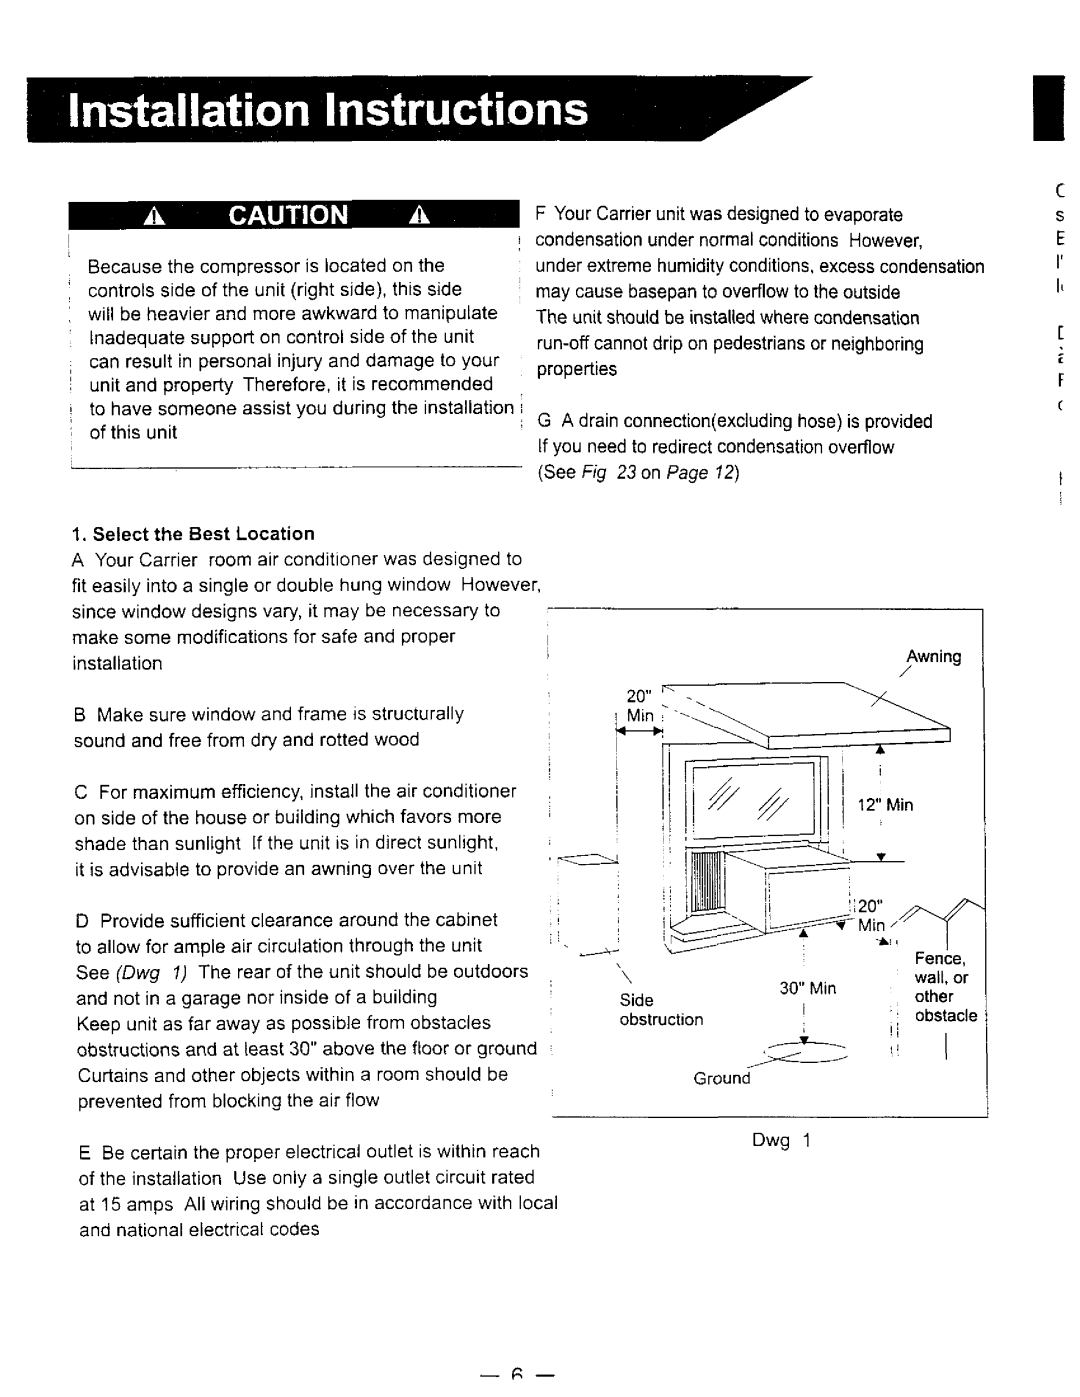 Carrier 73SC008A1C, 73SC005A1C manual 